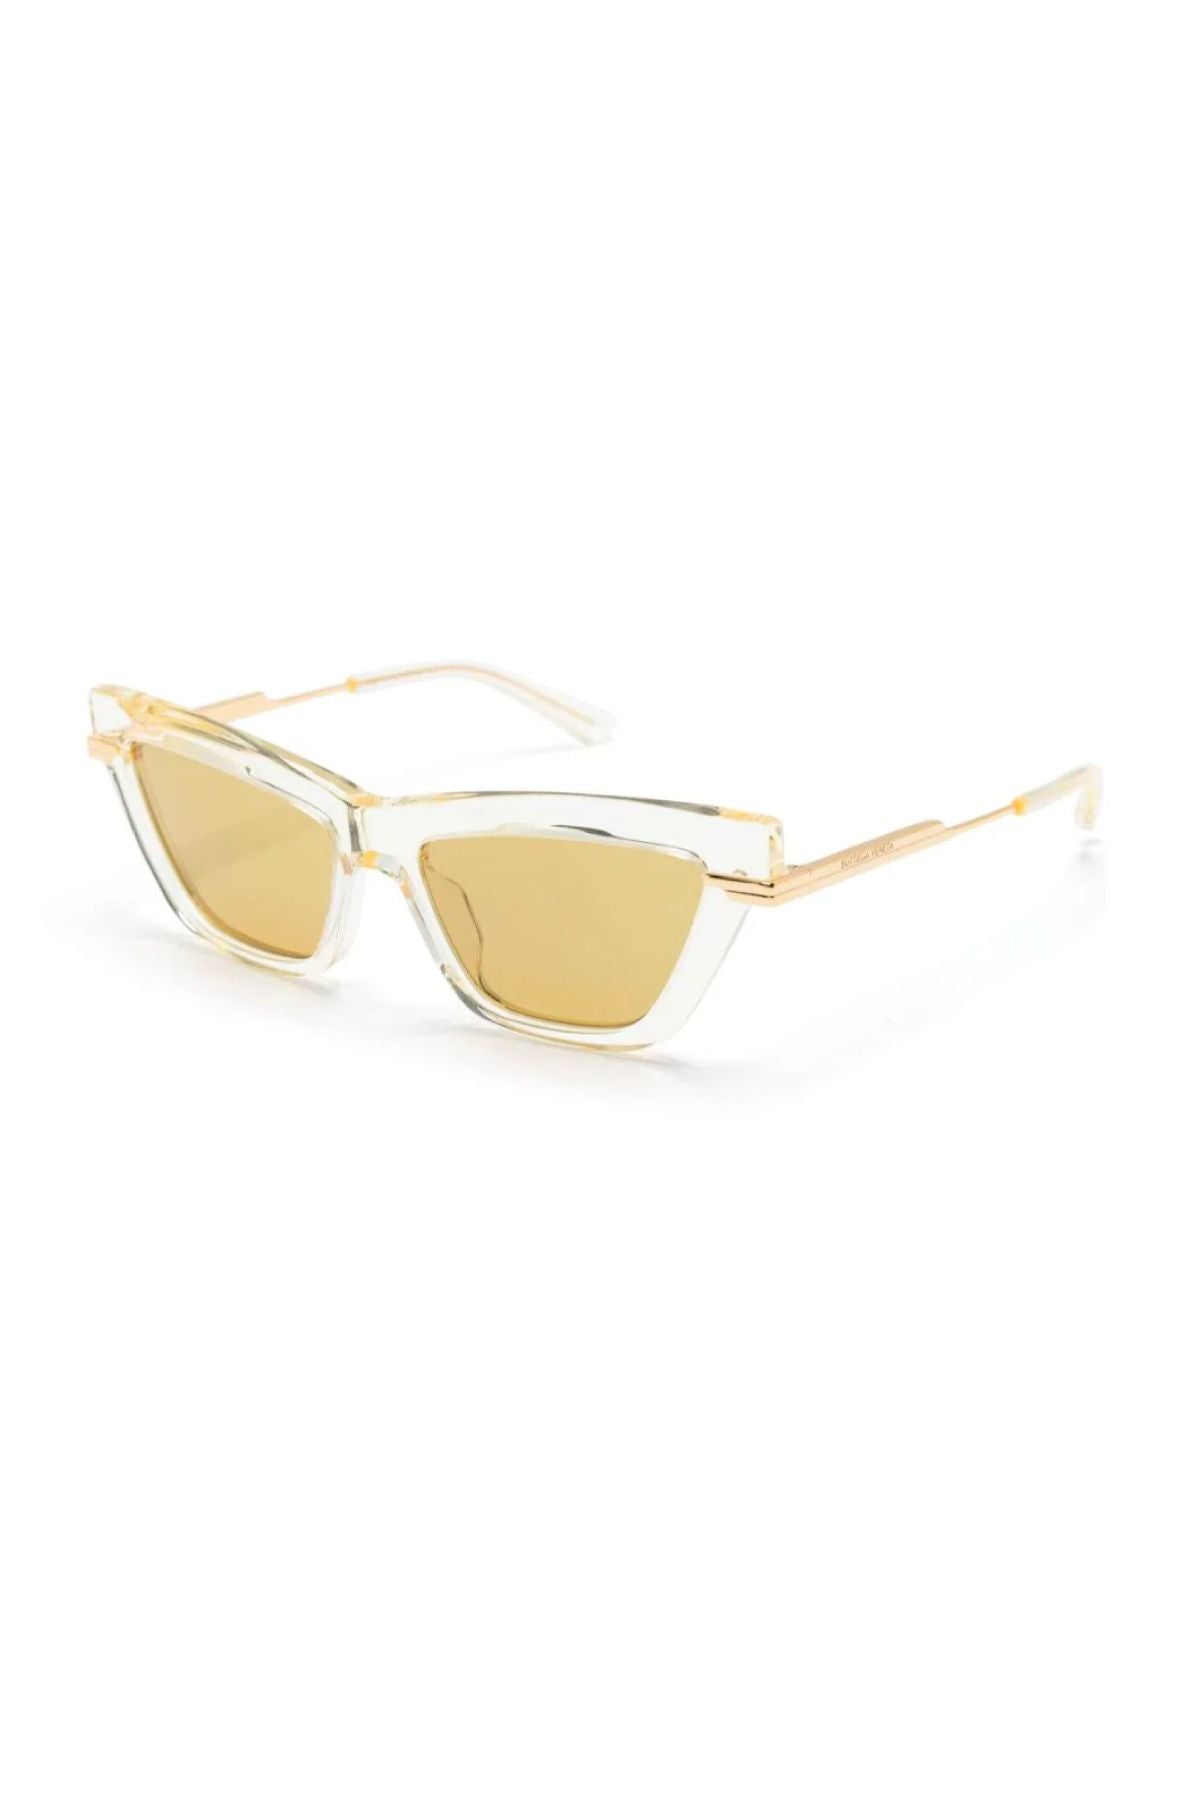 Bottega Veneta Cat Eye Sunglasses - Yellow